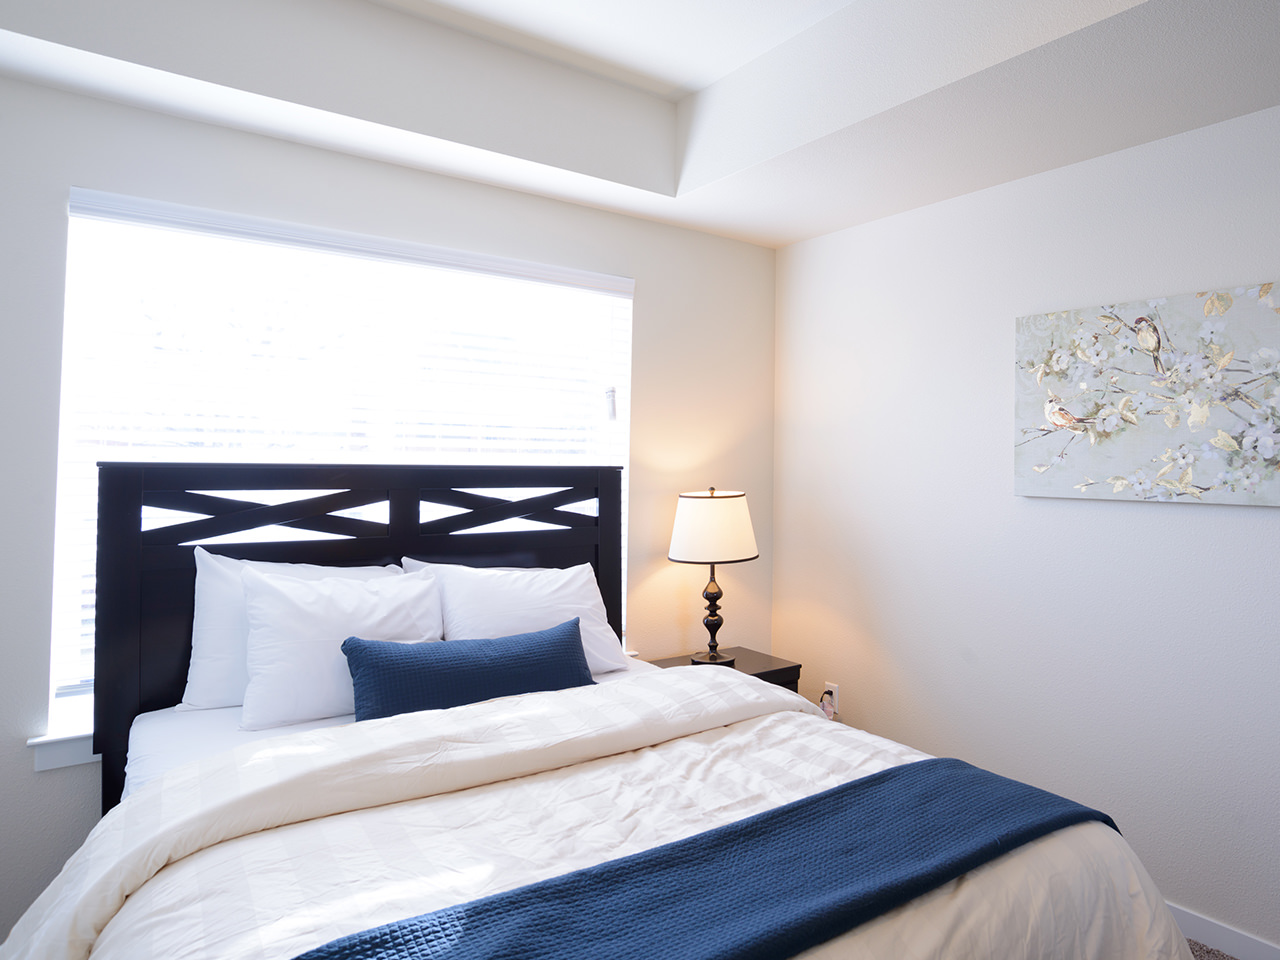 Apartments in Fort Collins for Rent: Studio, 1 Bedroom | College 830